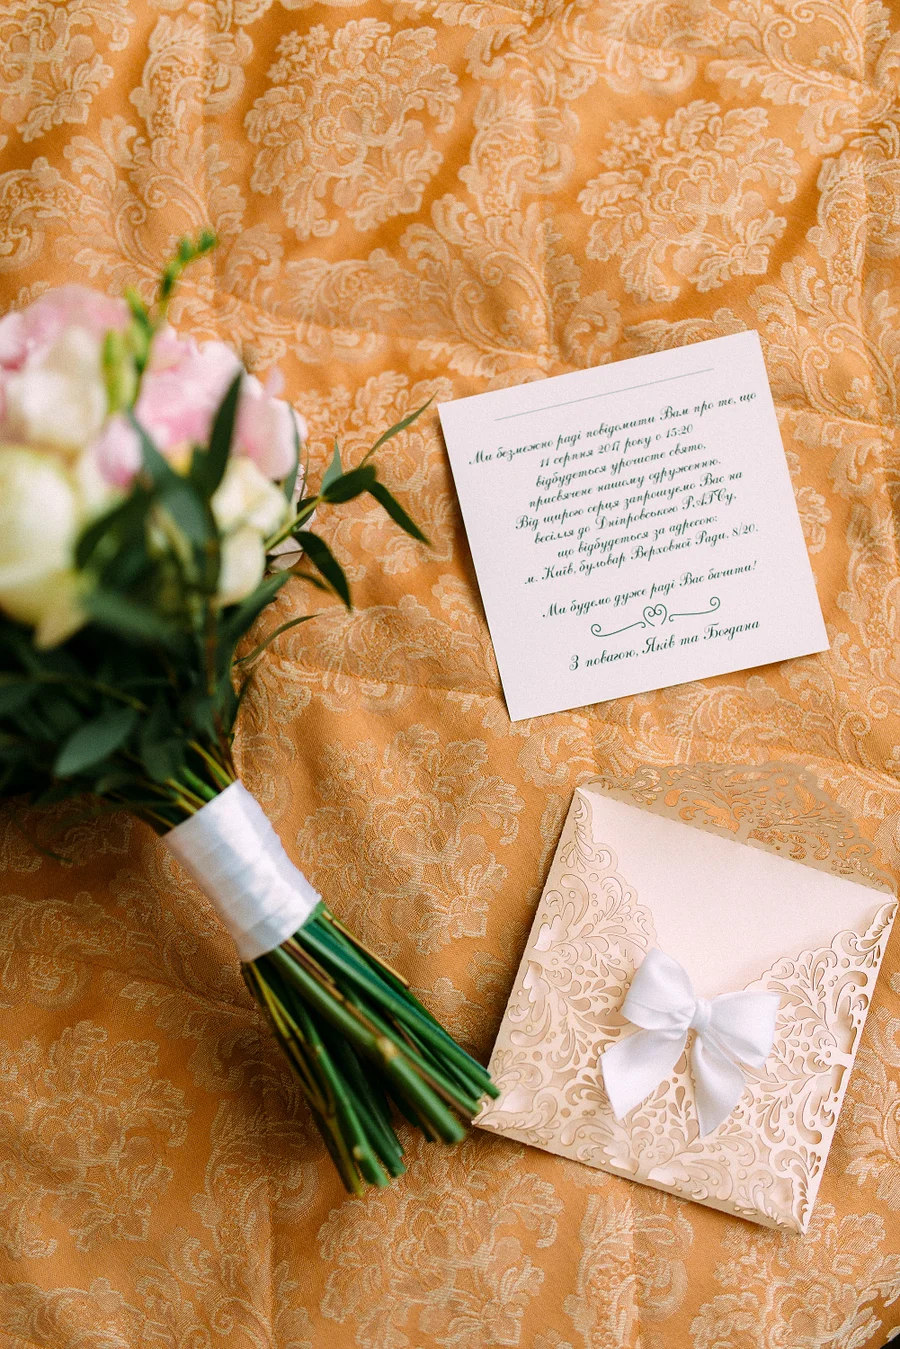 25+ WEDDING INVITATION INSERT CARDS GIFTS MONEY REQUEST POEM GUEST  INFORMATION | eBay